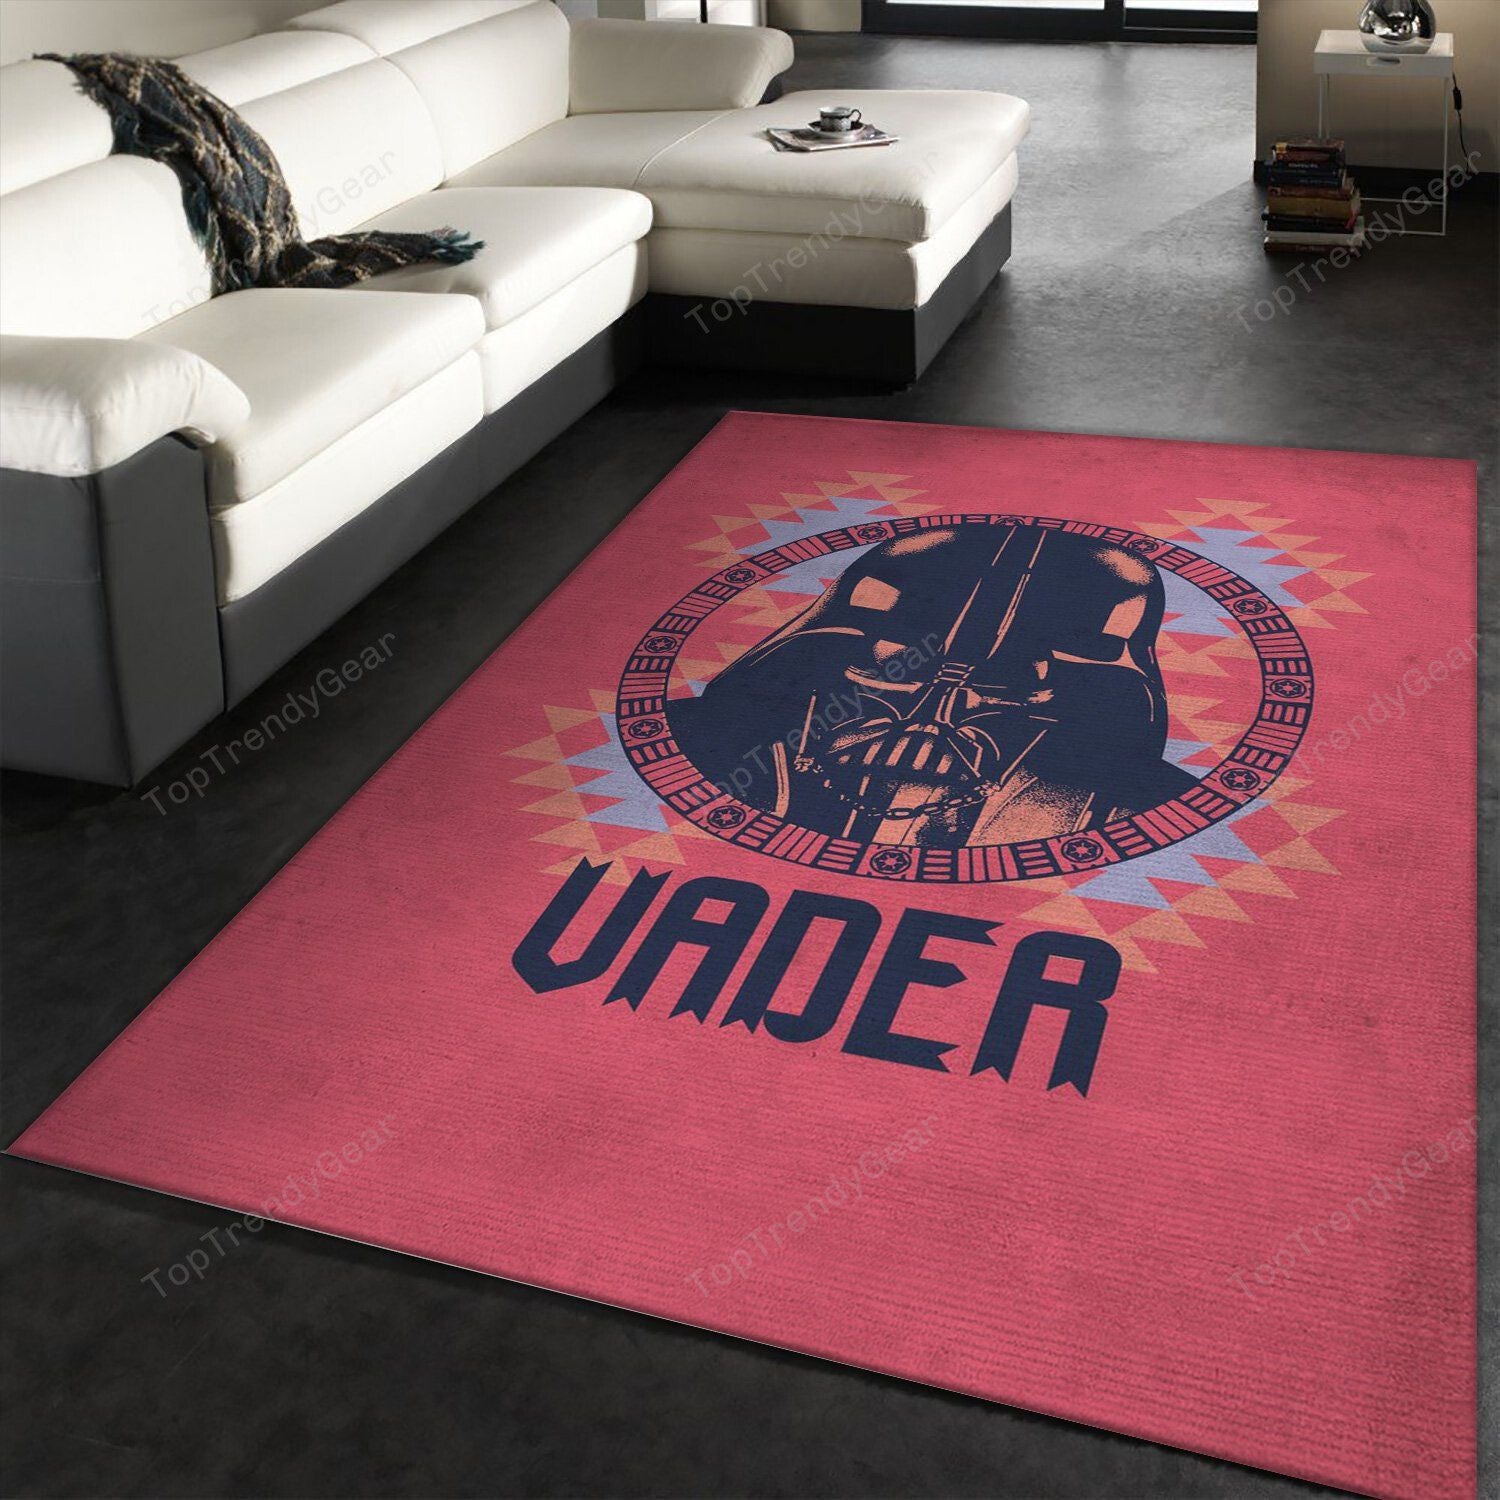 Vader Rug Star Wars Arts Rug Rectangle Area Rugs Carpet For Living Room Bedroom Kitchen Rugs Non-Slip Carpet Rp126918